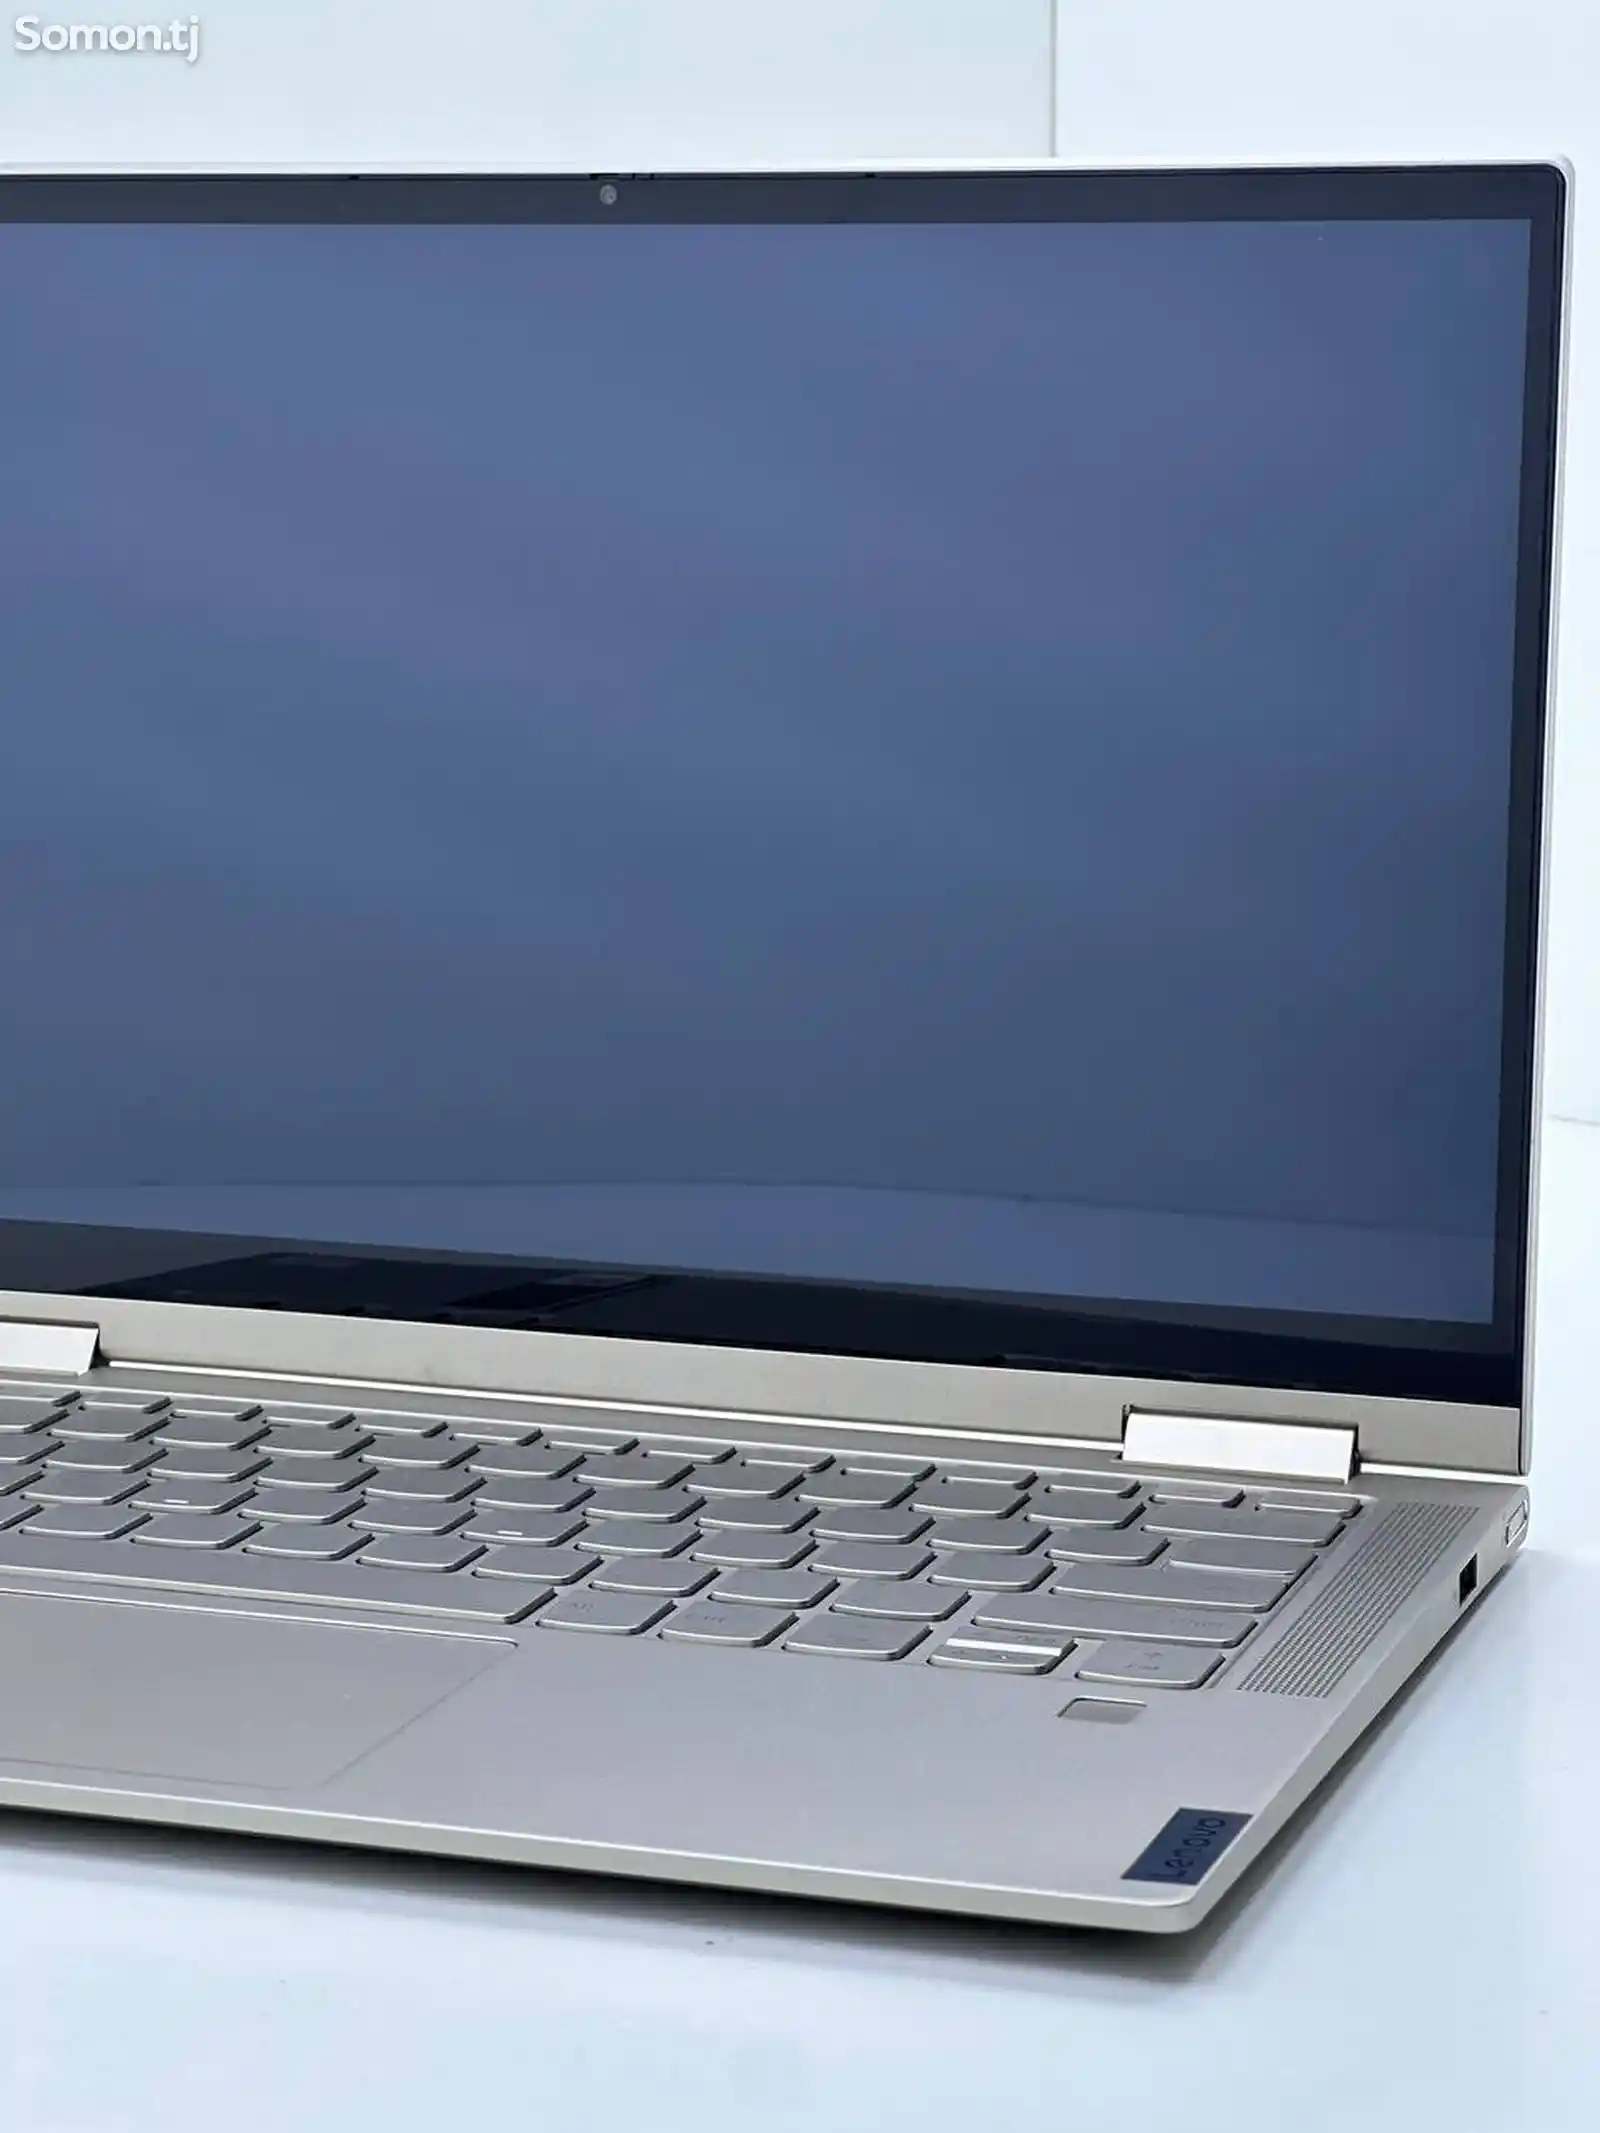 Ноутбук Lenovo Yoga i5-10/8gb ddr4/256gb ssd m2/x360 touchscreen-4